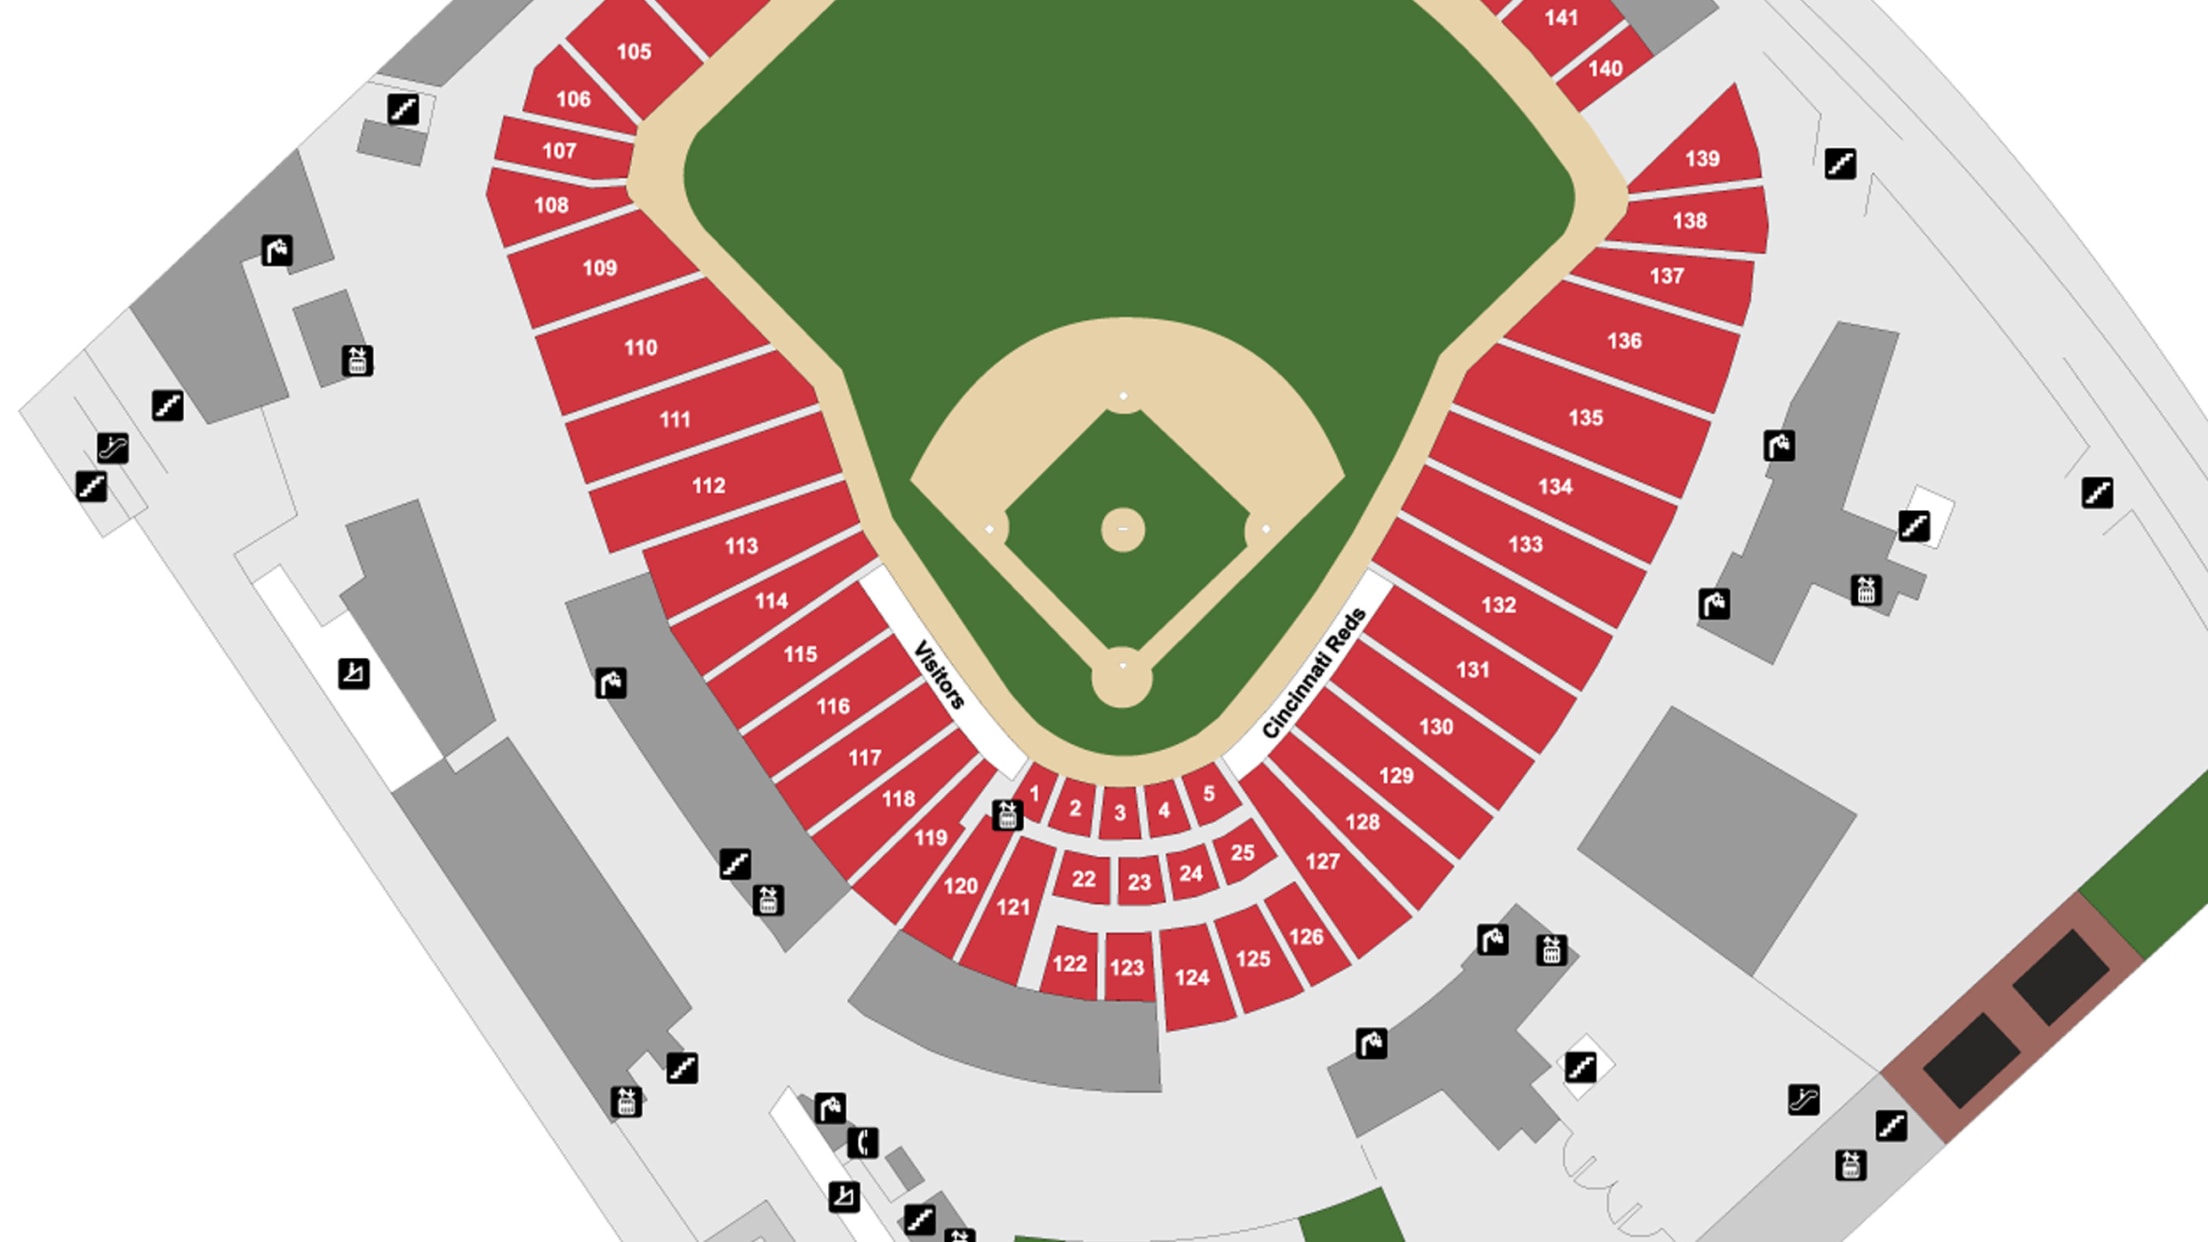 Great American Ball Park, Cincinnati Reds